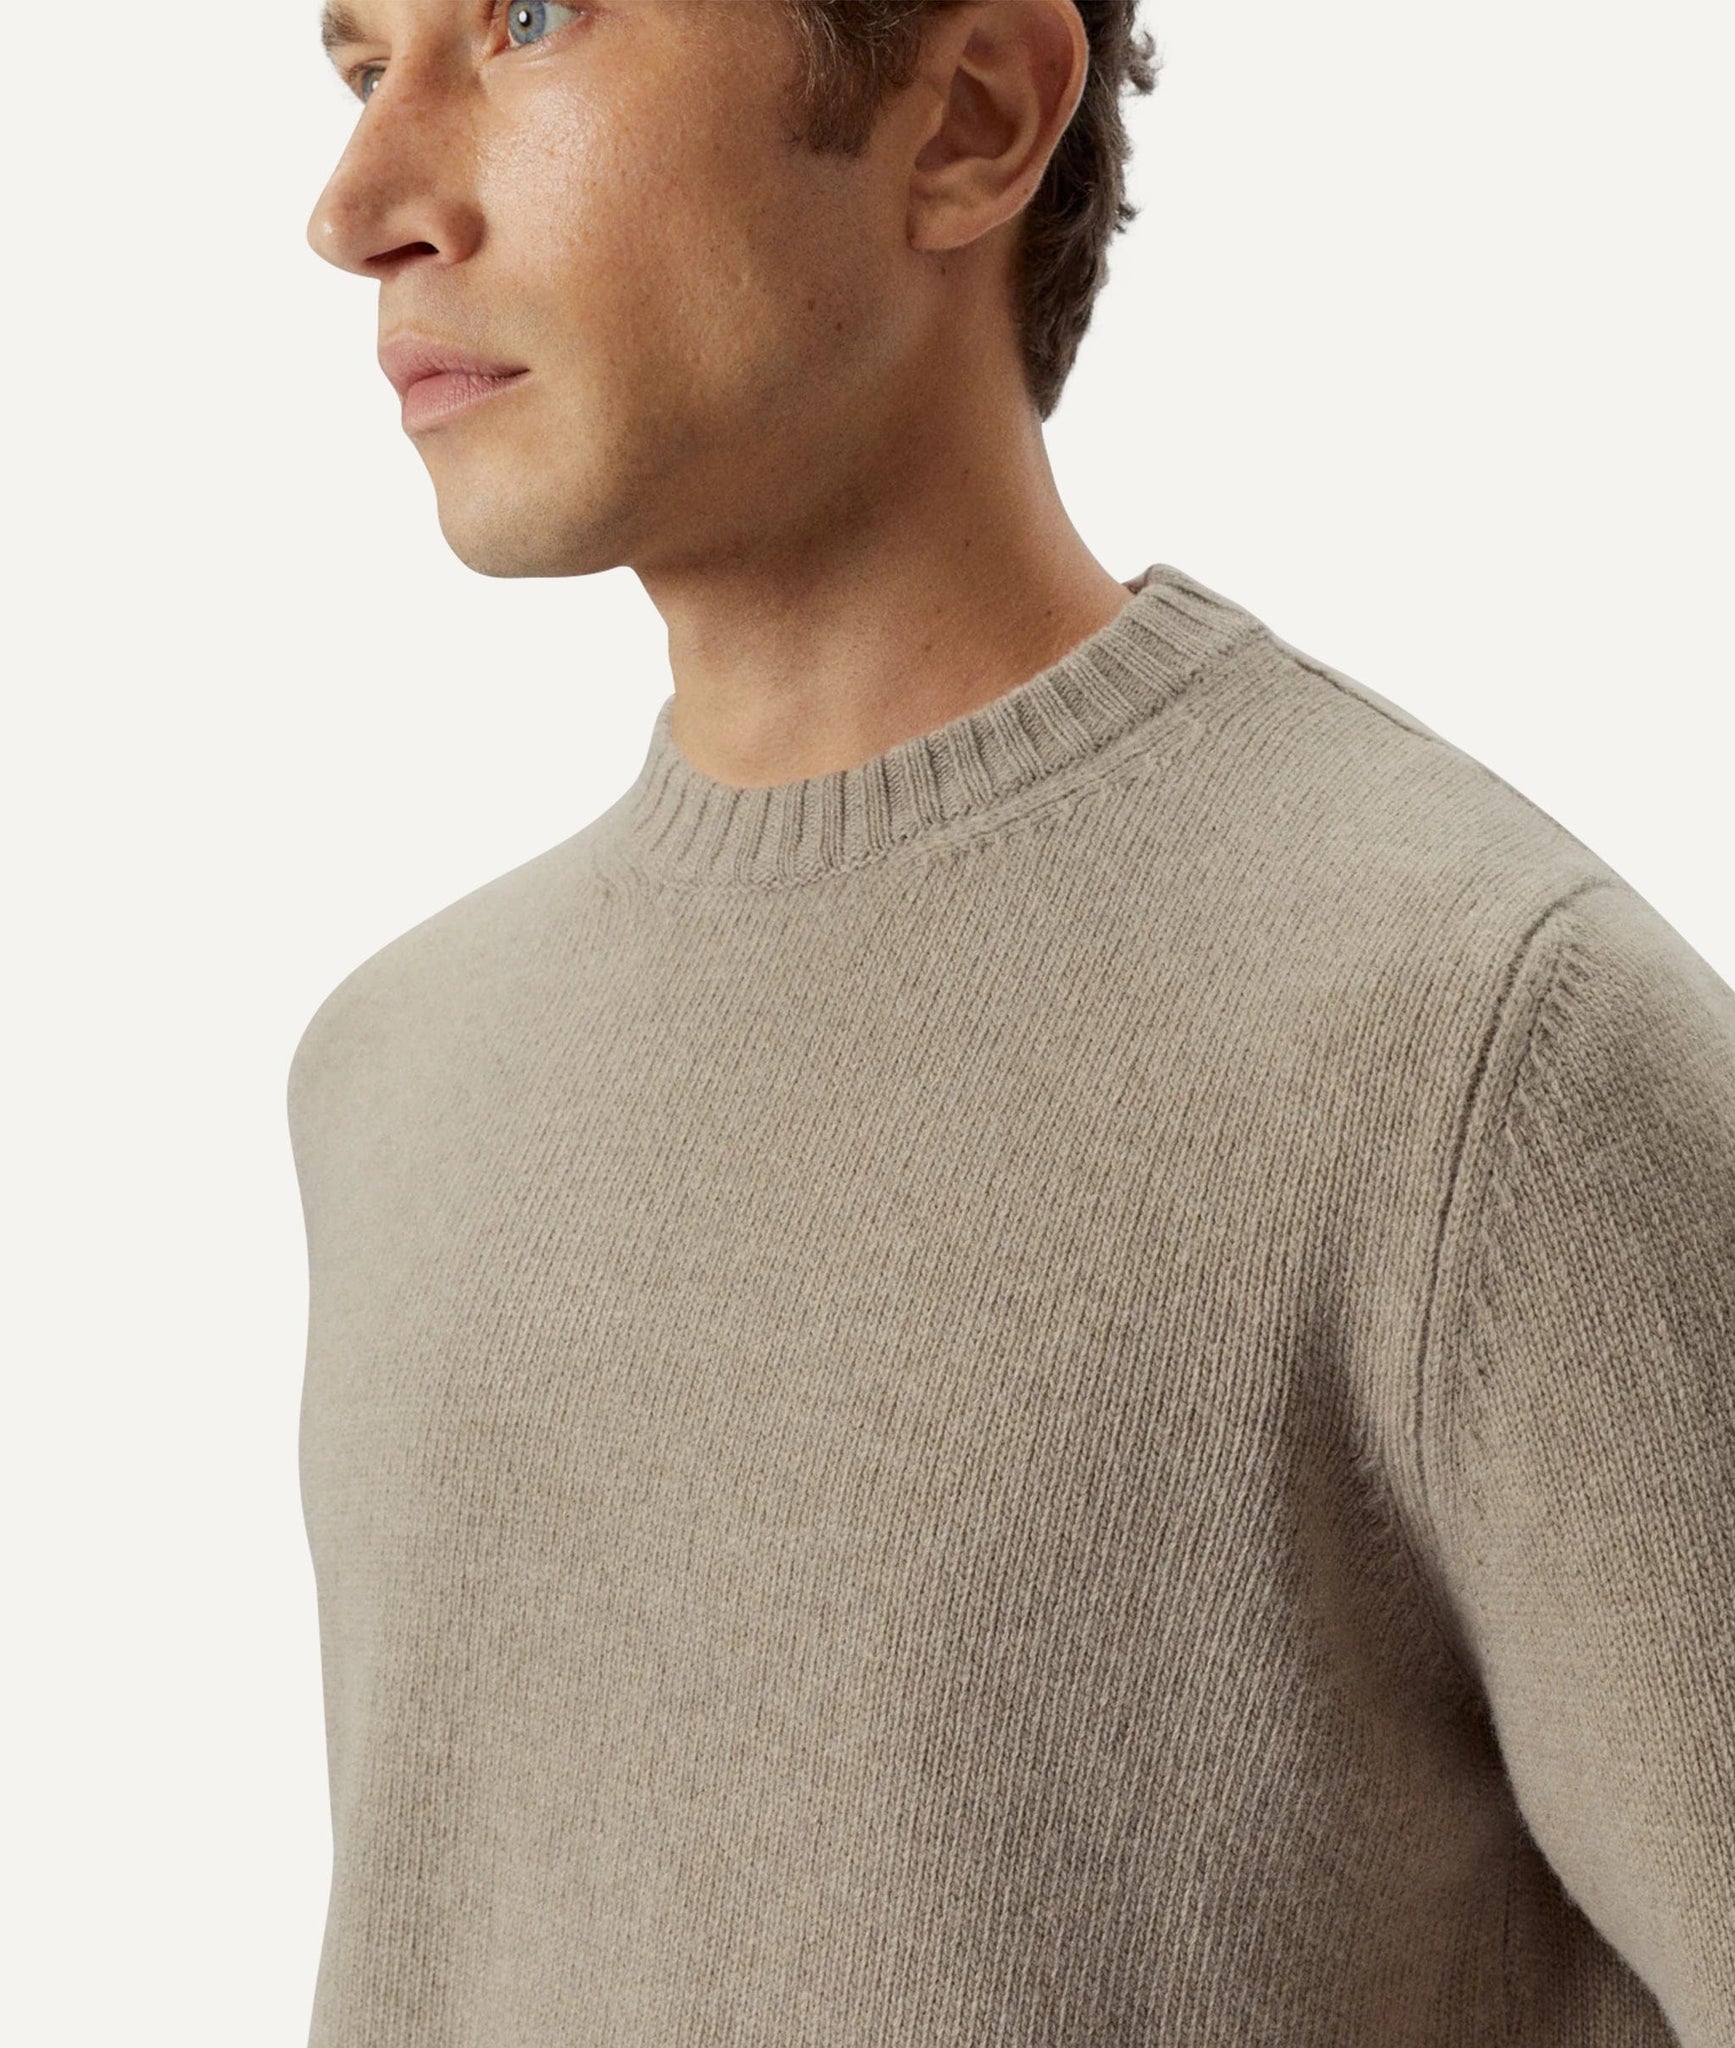 The Woolen Sweater